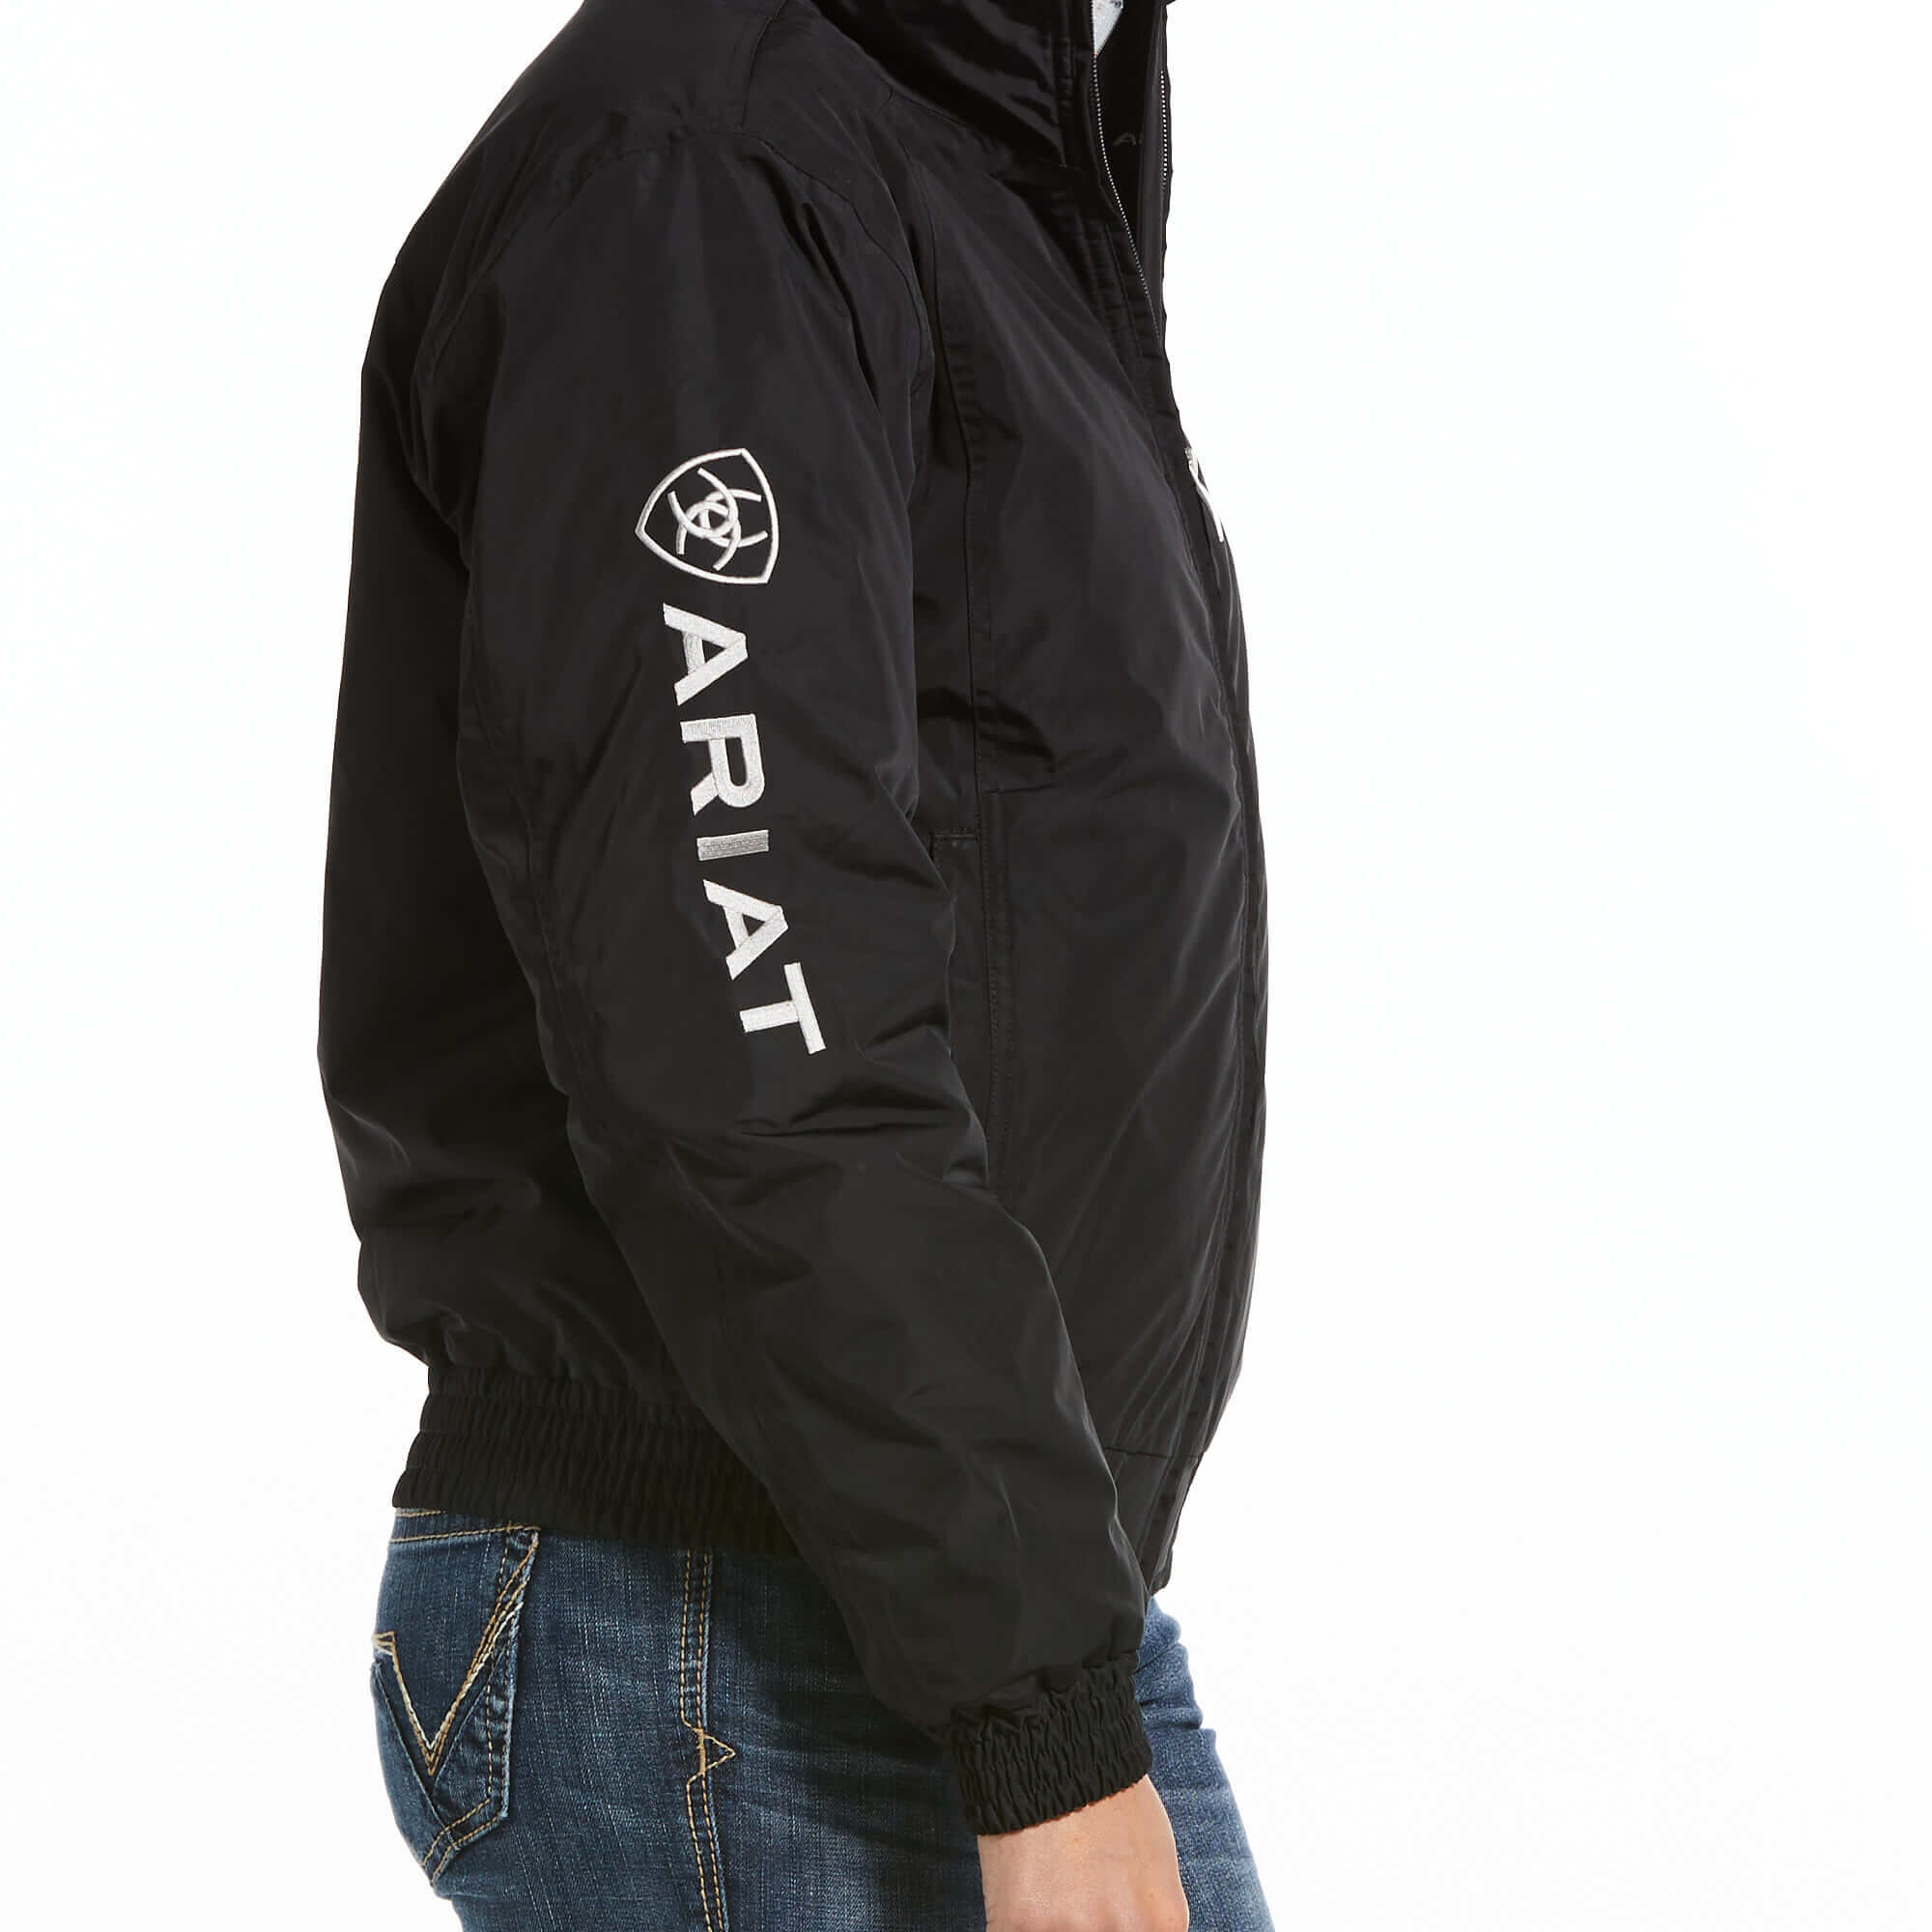 Ariat Team Stable Womens Jacket Waterproof Black All Sizes 